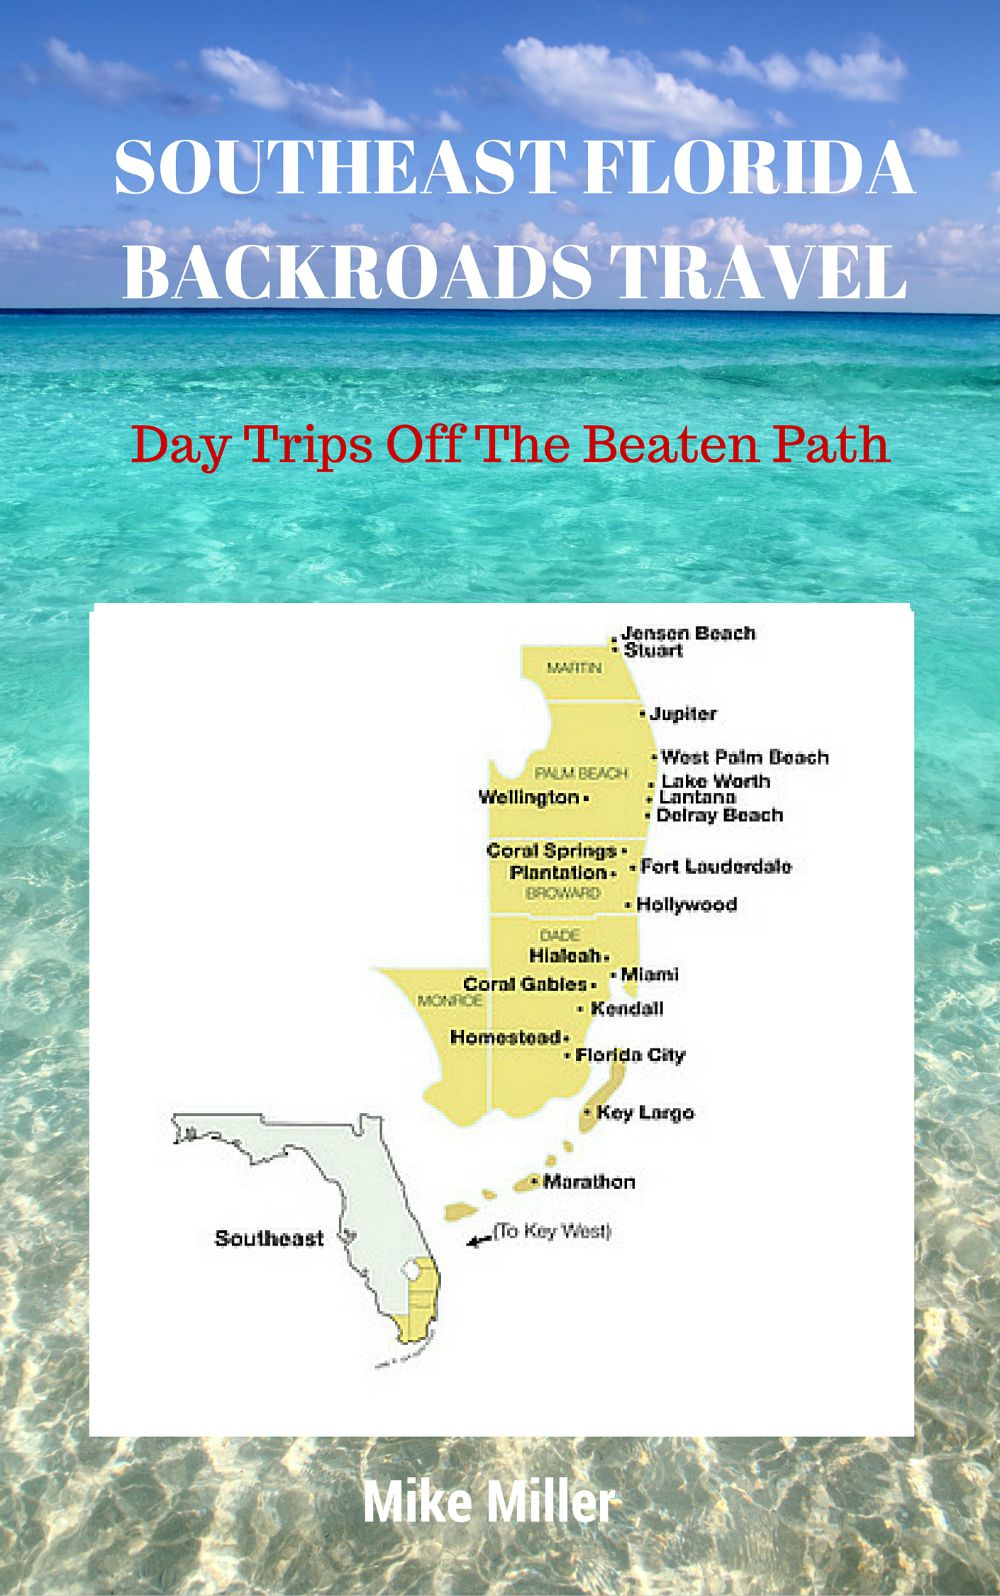 Southeast Florida Travel Guide: Florida Backroads Travel